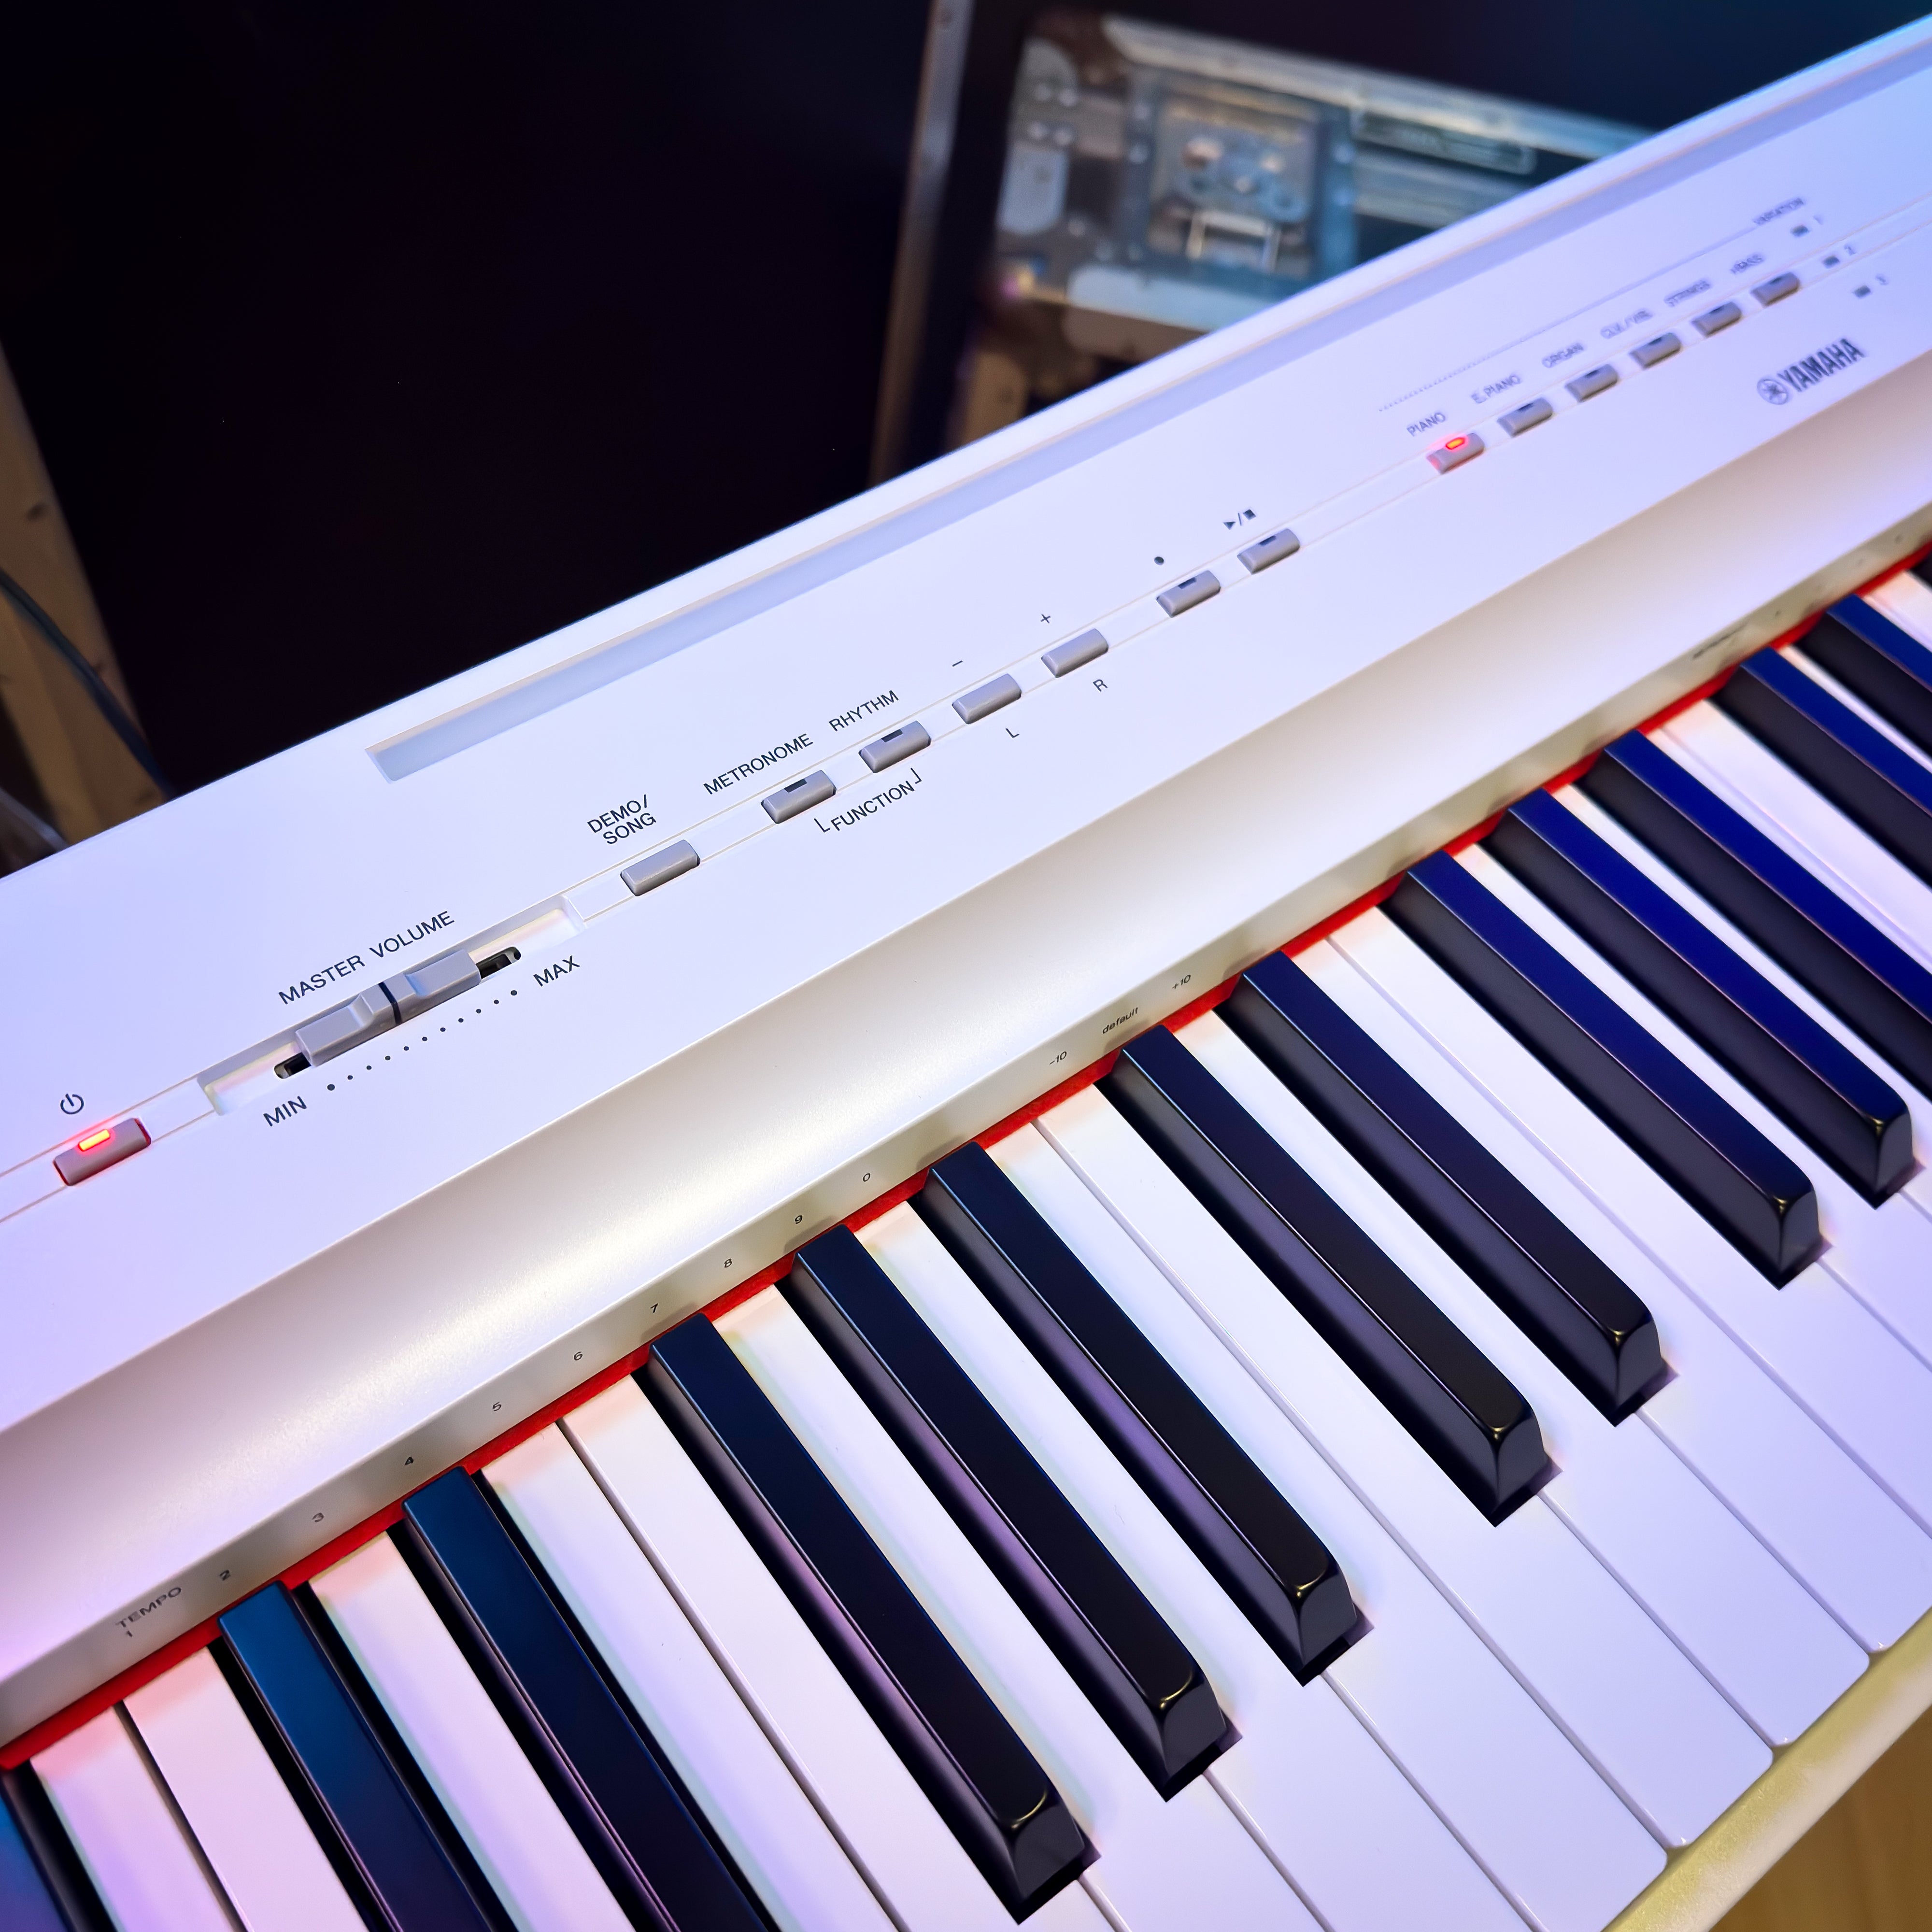 Yamaha P-125a Digital Piano - White - View 2